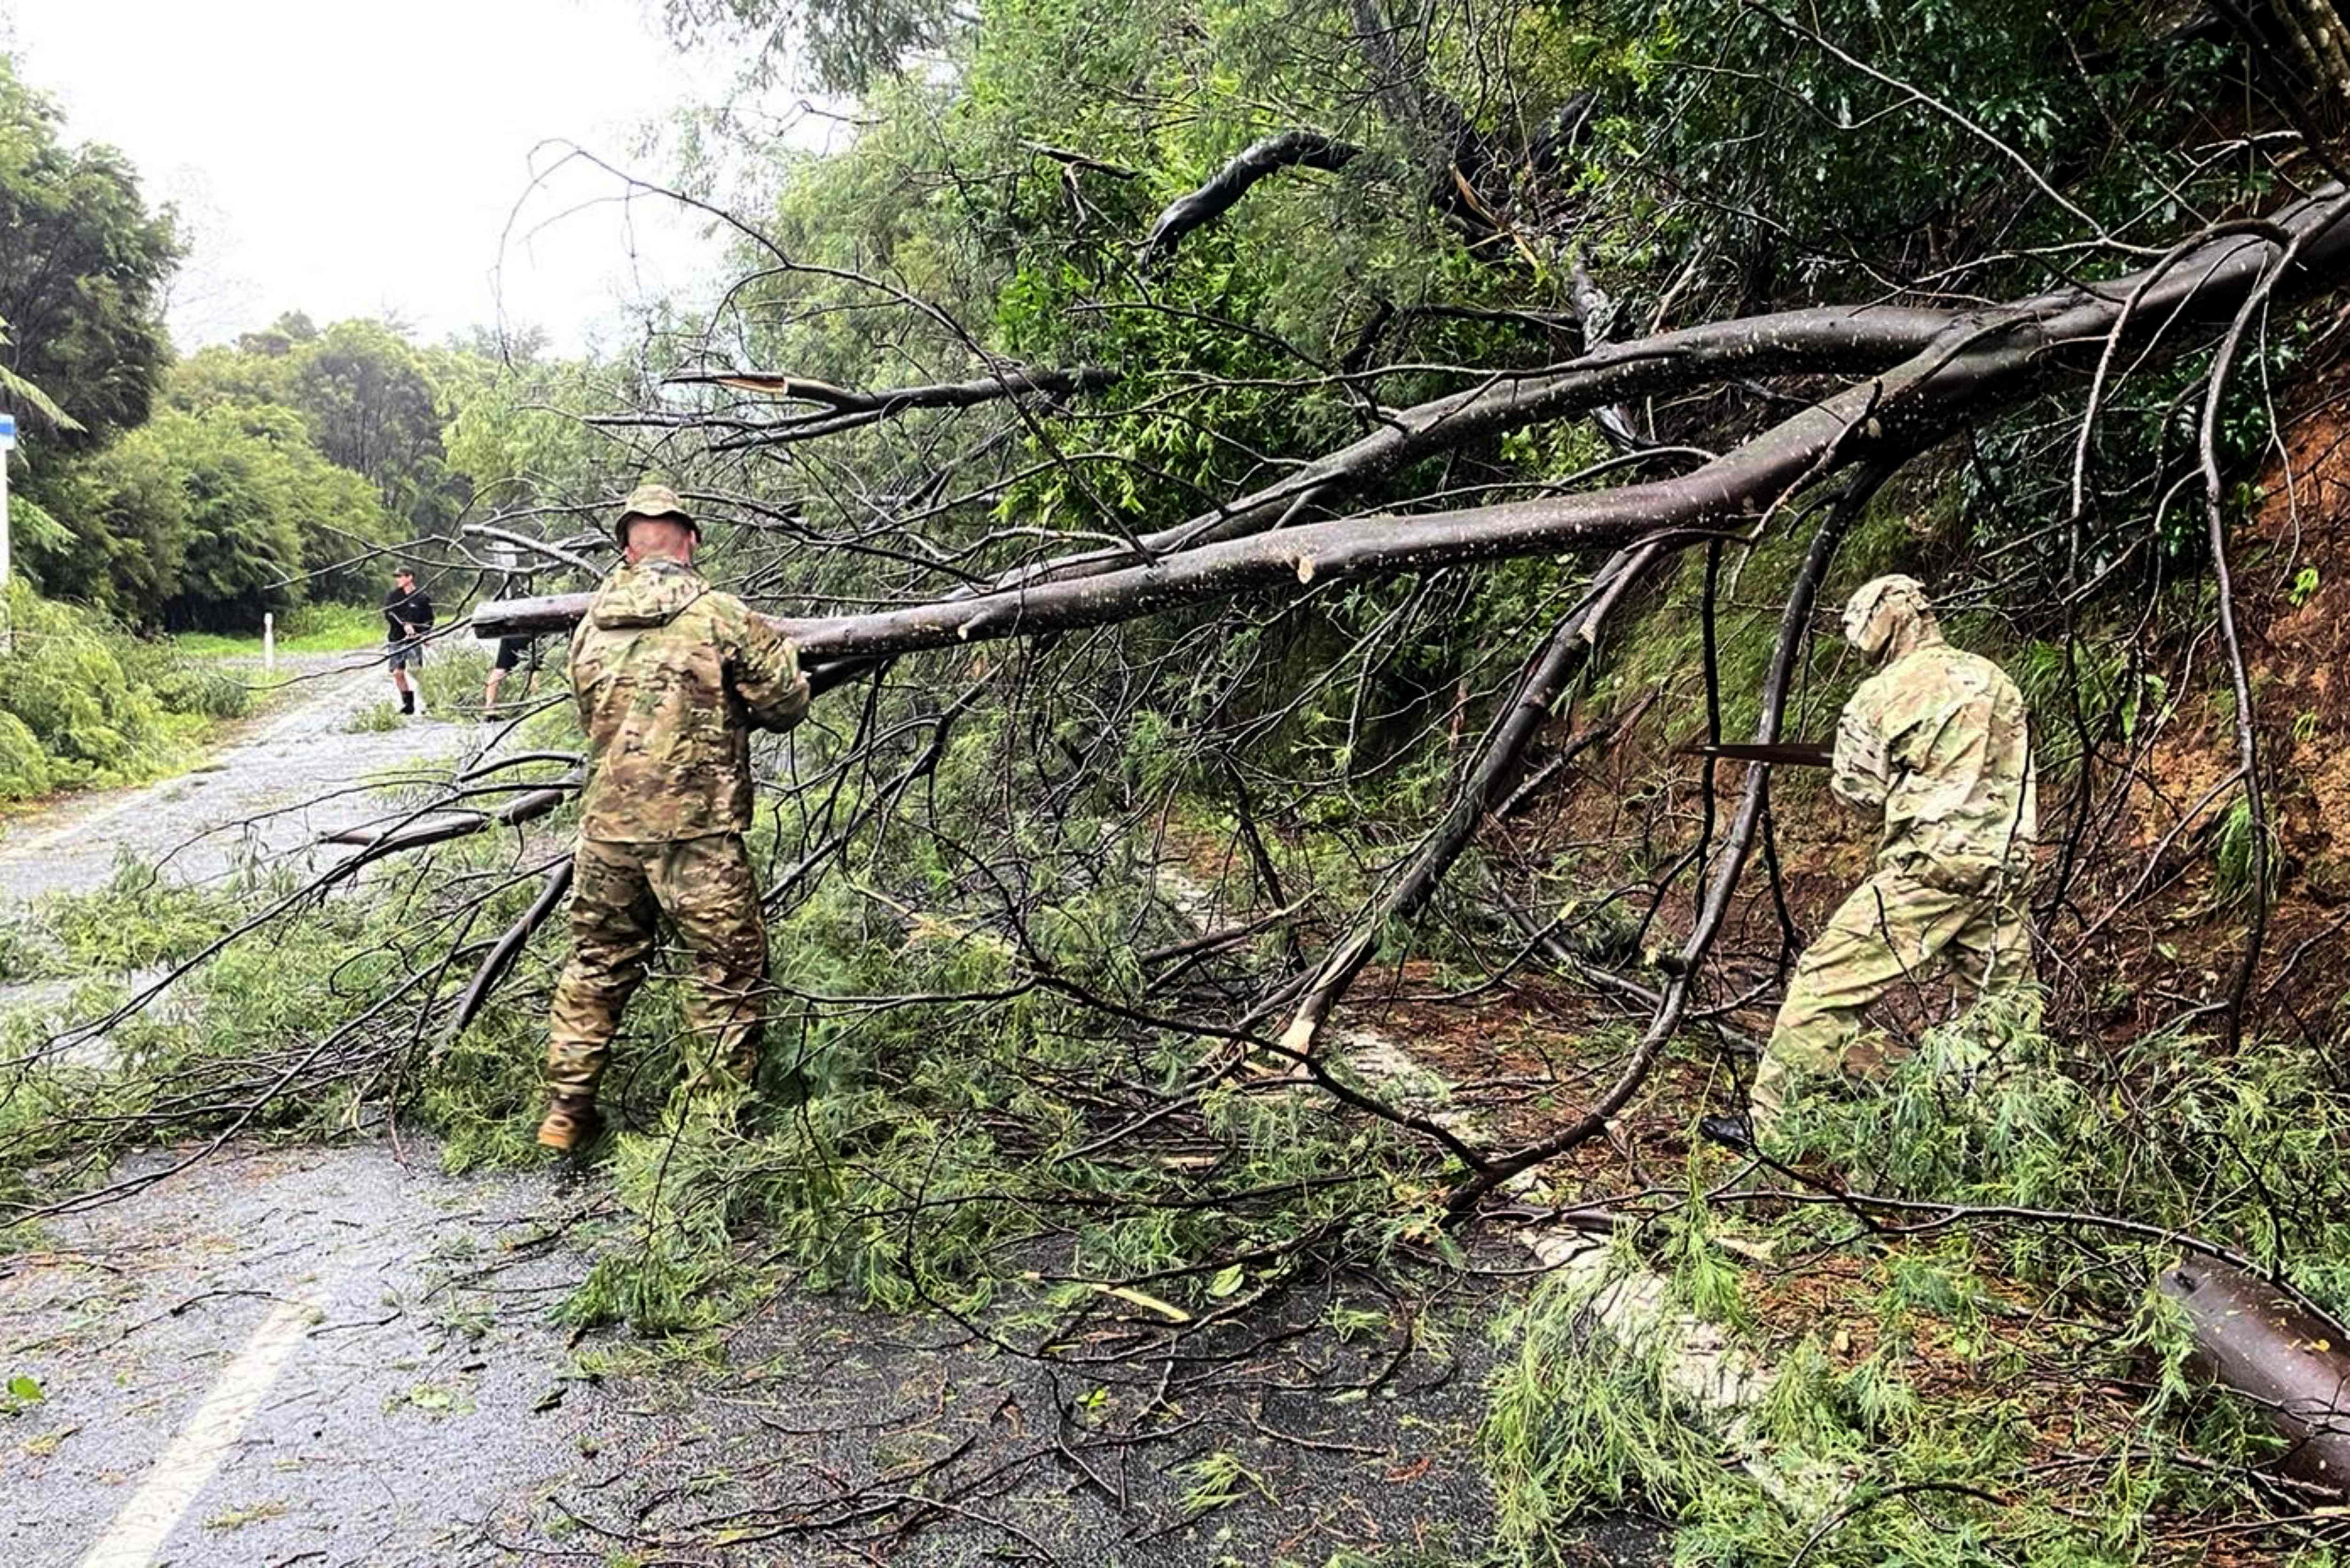 Army clearing fallen trees near Matarangi, in the Coromandel area of the North Island